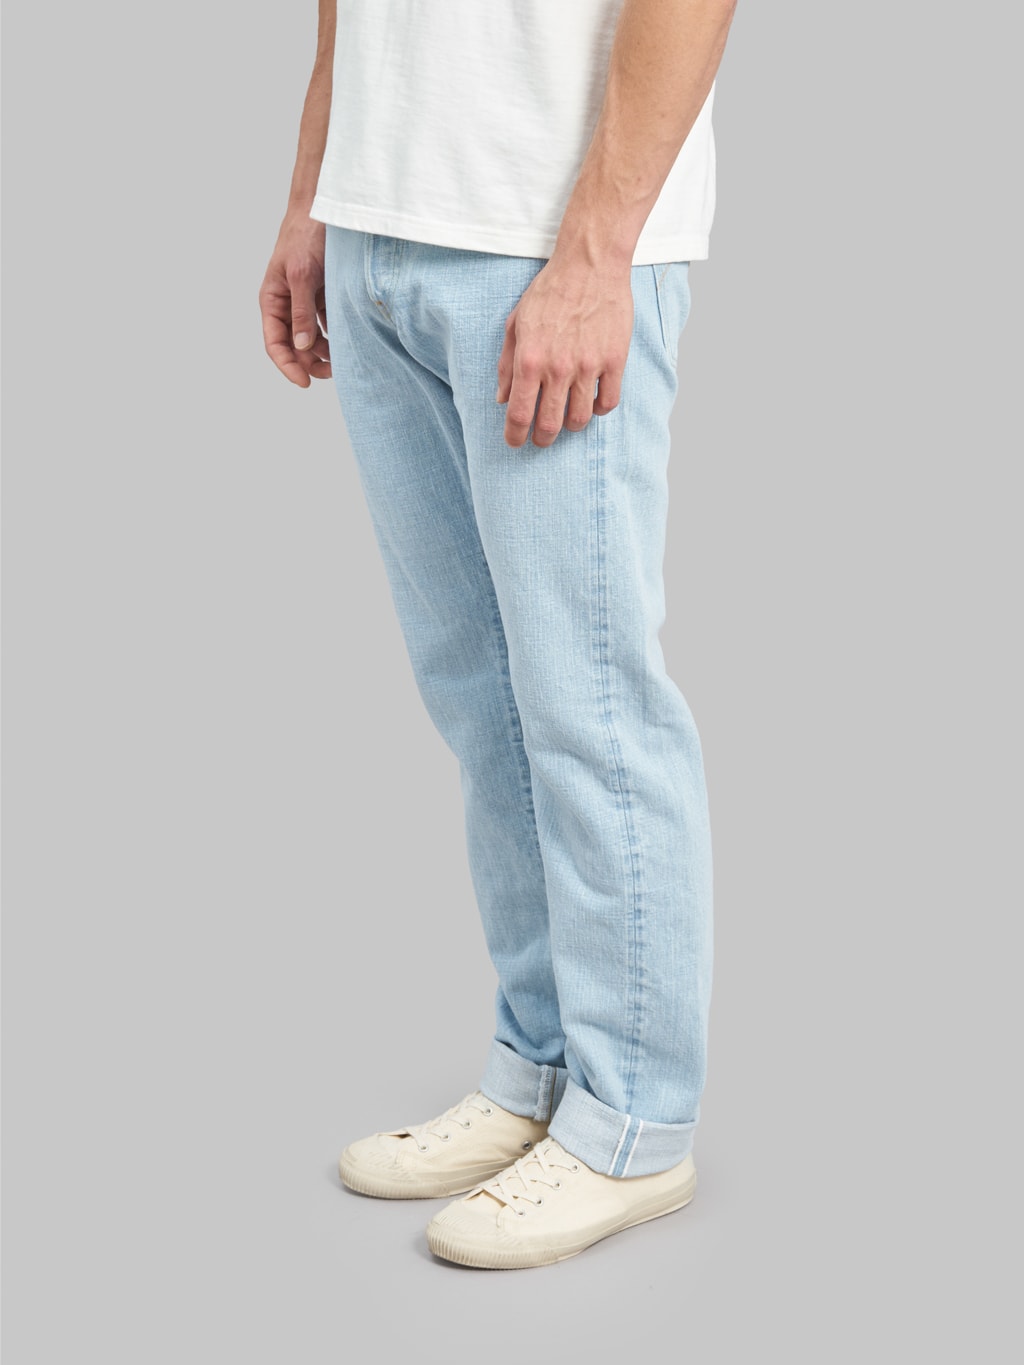 redcast heritage x oni denim kerama blue 15oz selvedge jeans side fit